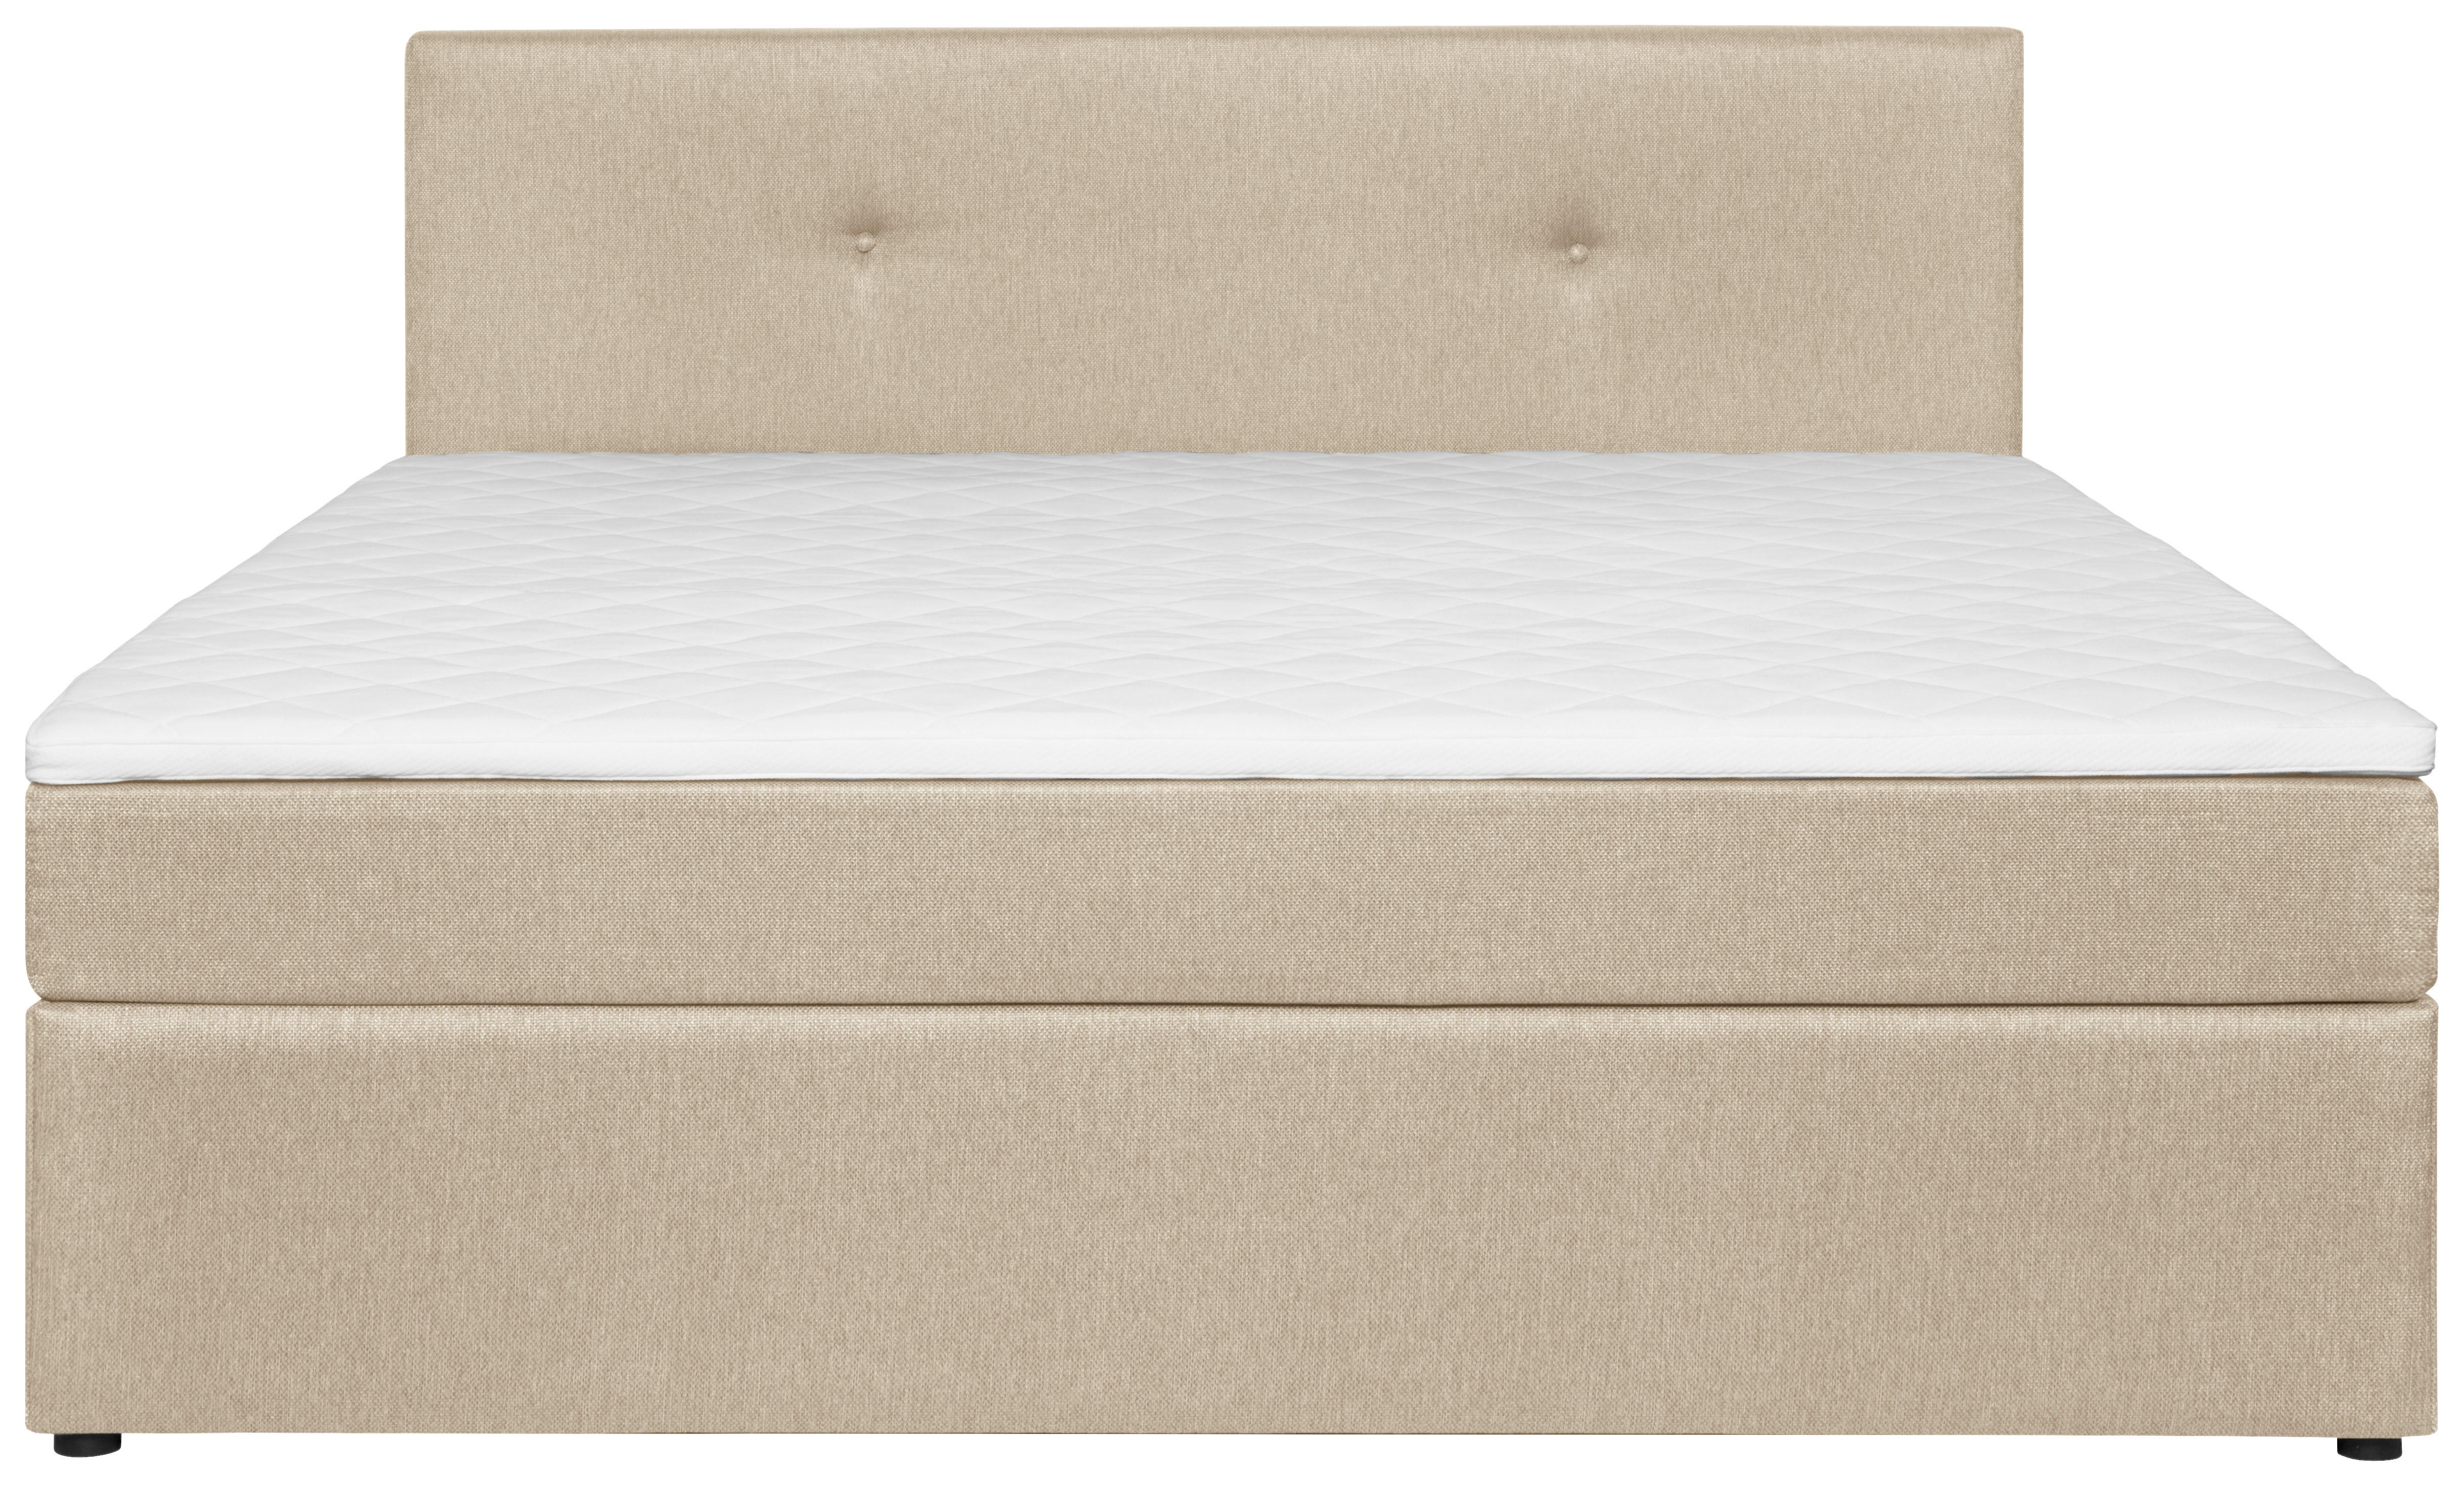 BOX KREVET    120/200 cm  - boje pijeska/crna, Konvencionalno, drvo/tekstil (120/200cm) - P & B